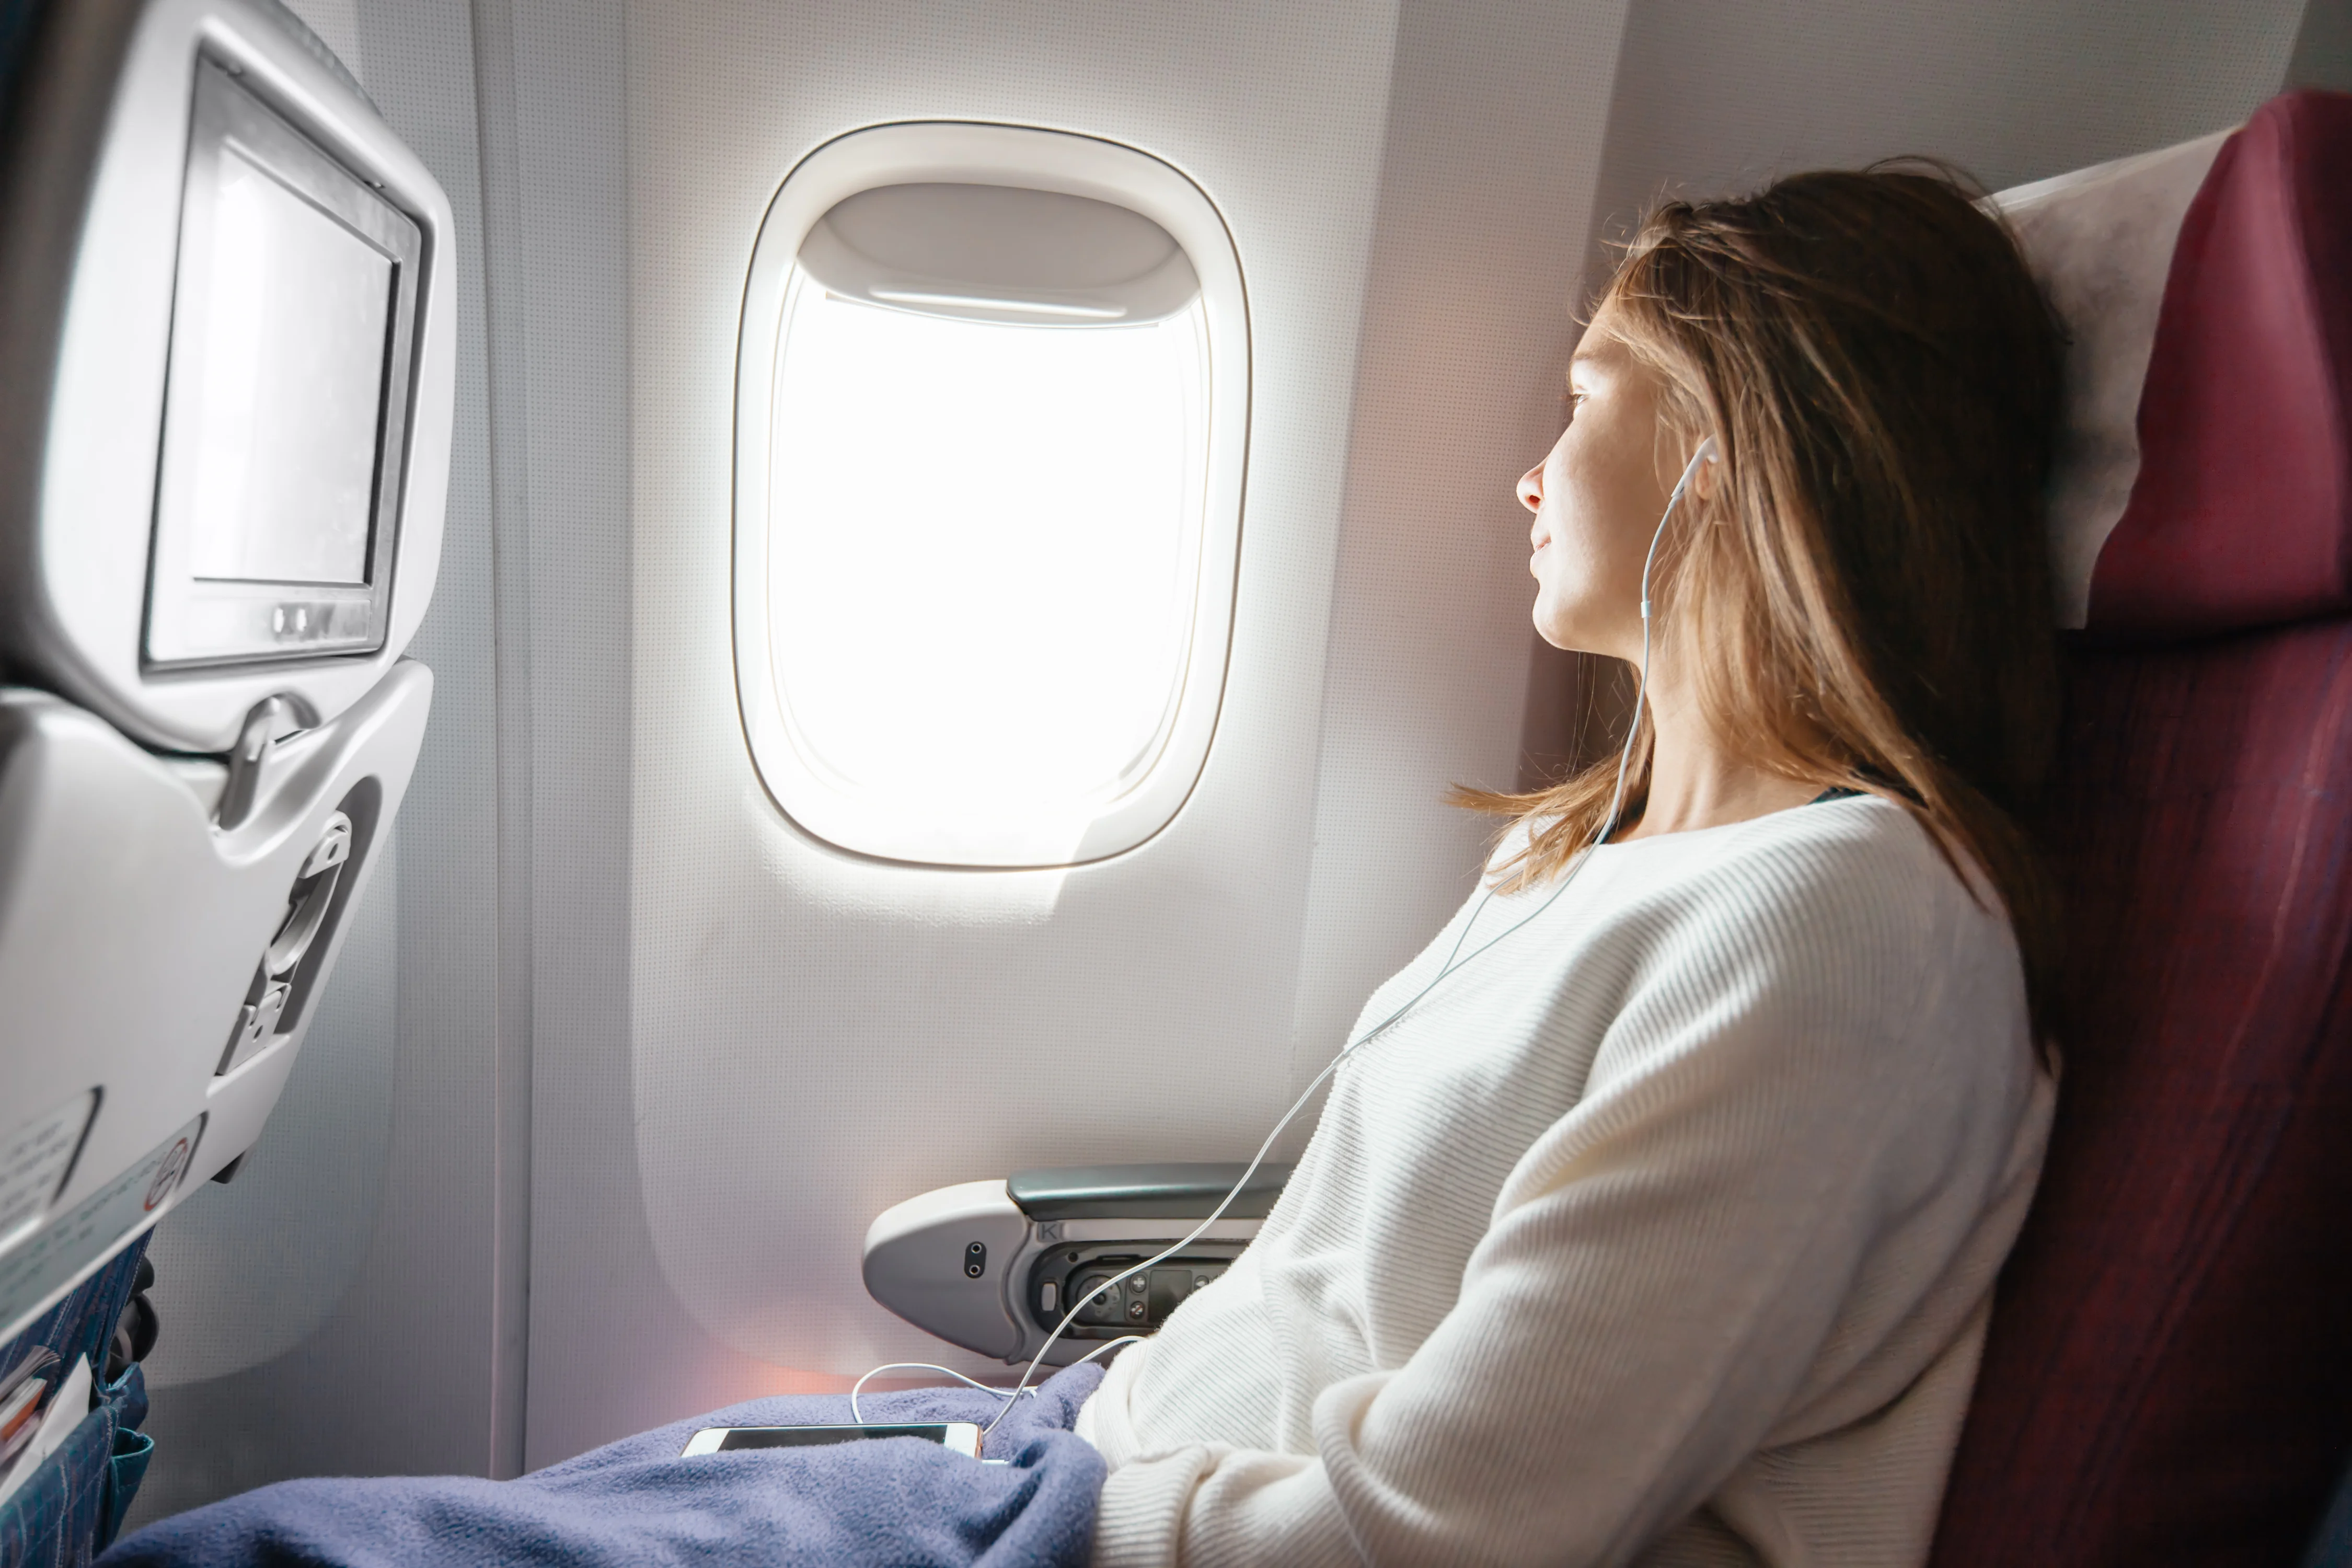 Girl looking through airplane window